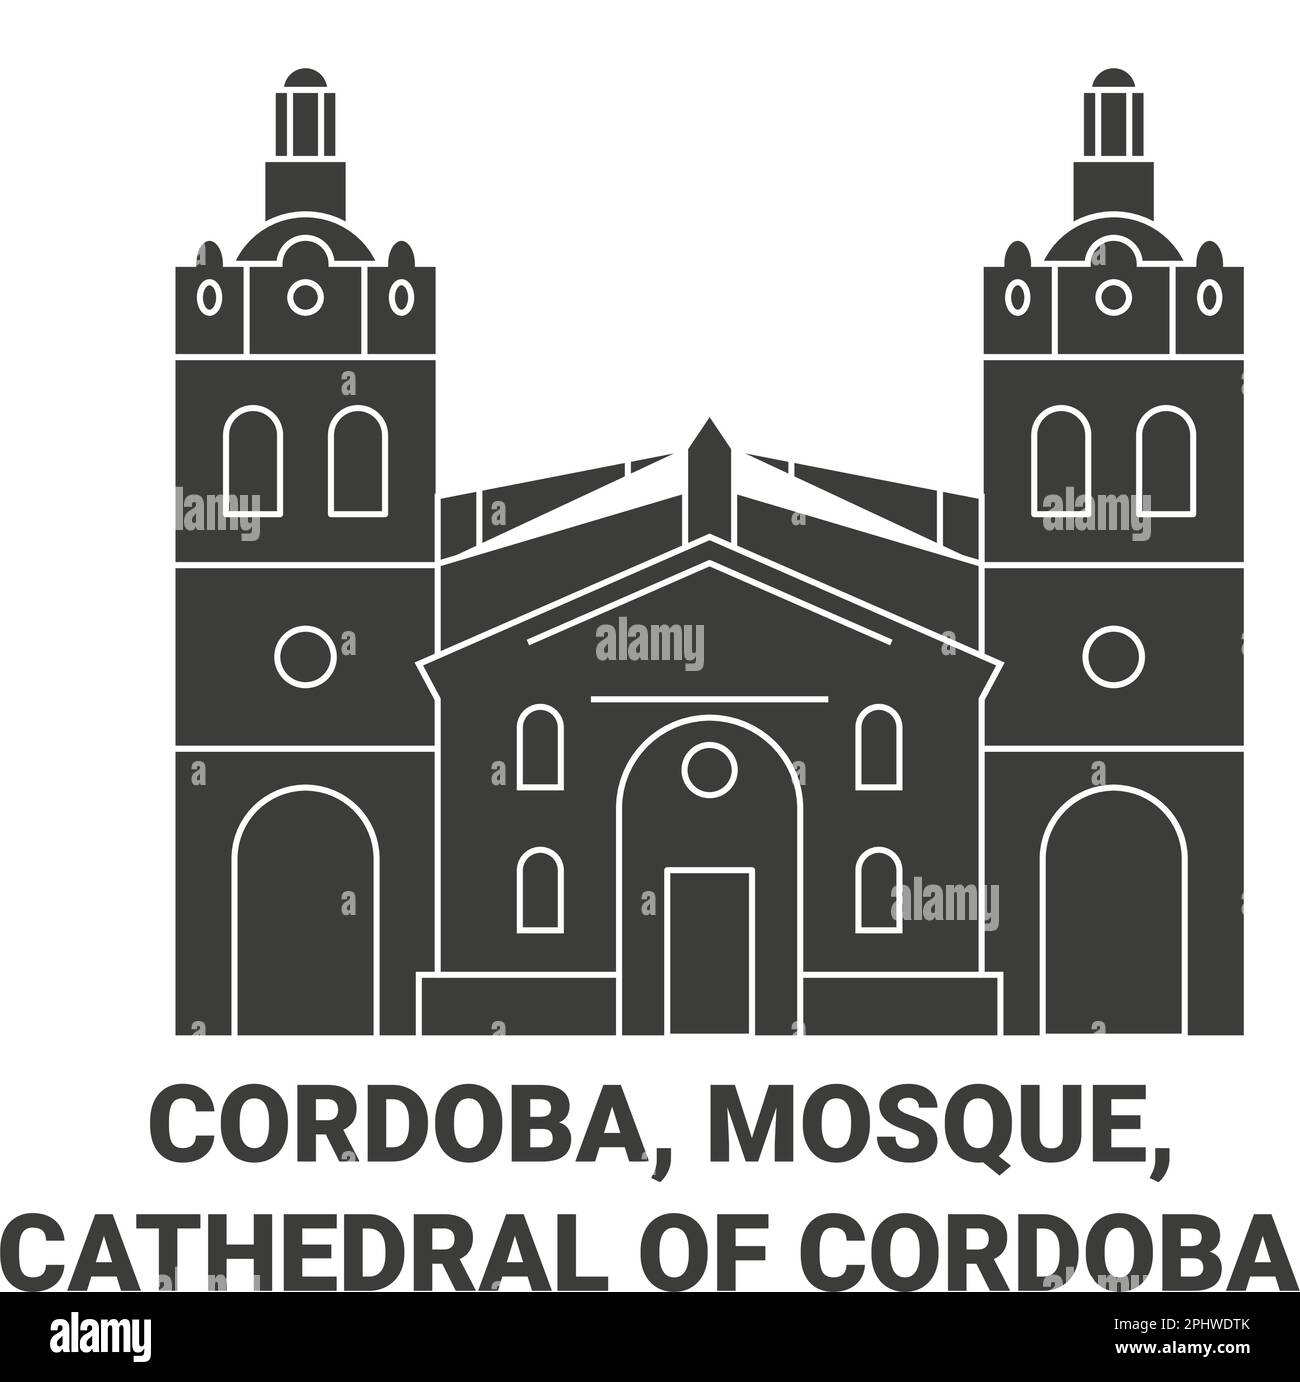 Argentina, Cordoba, Mosque, Cathedral Of Cordoba travel landmark vector illustration Stock Vector